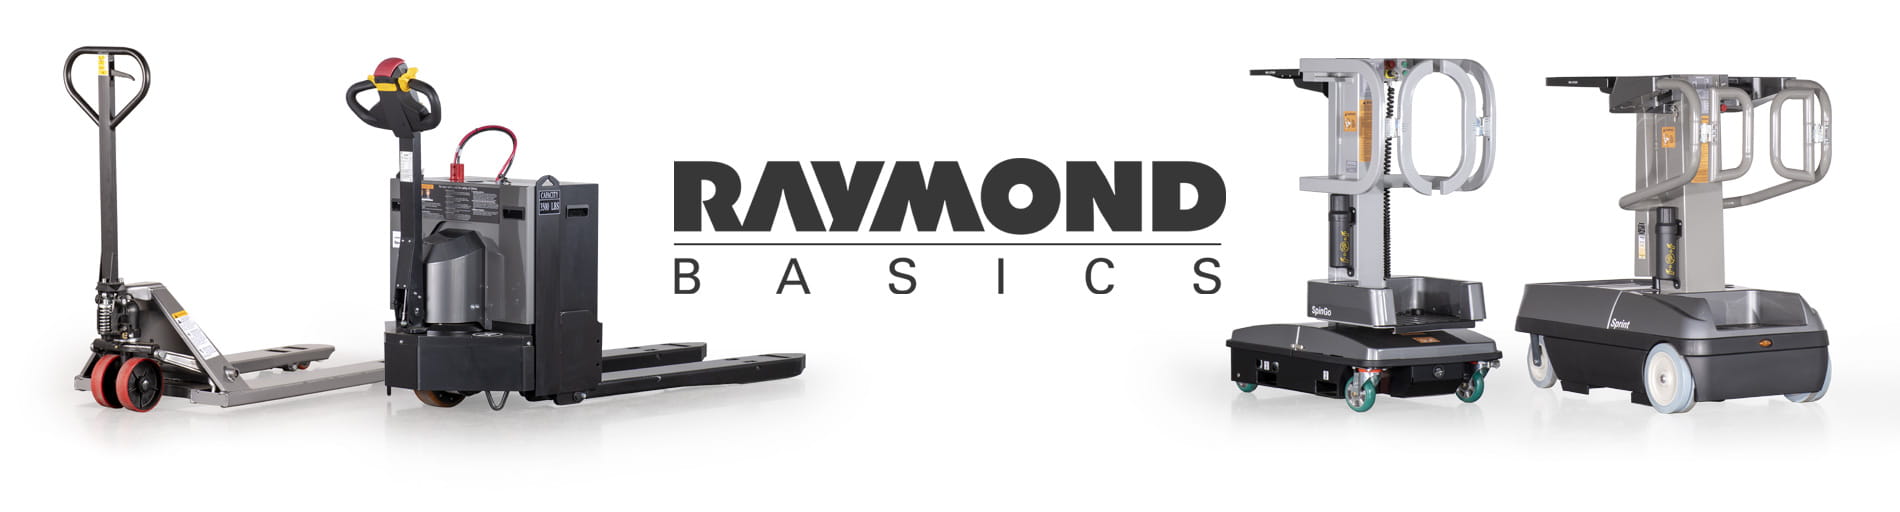 raymond basics, warehouse essentials